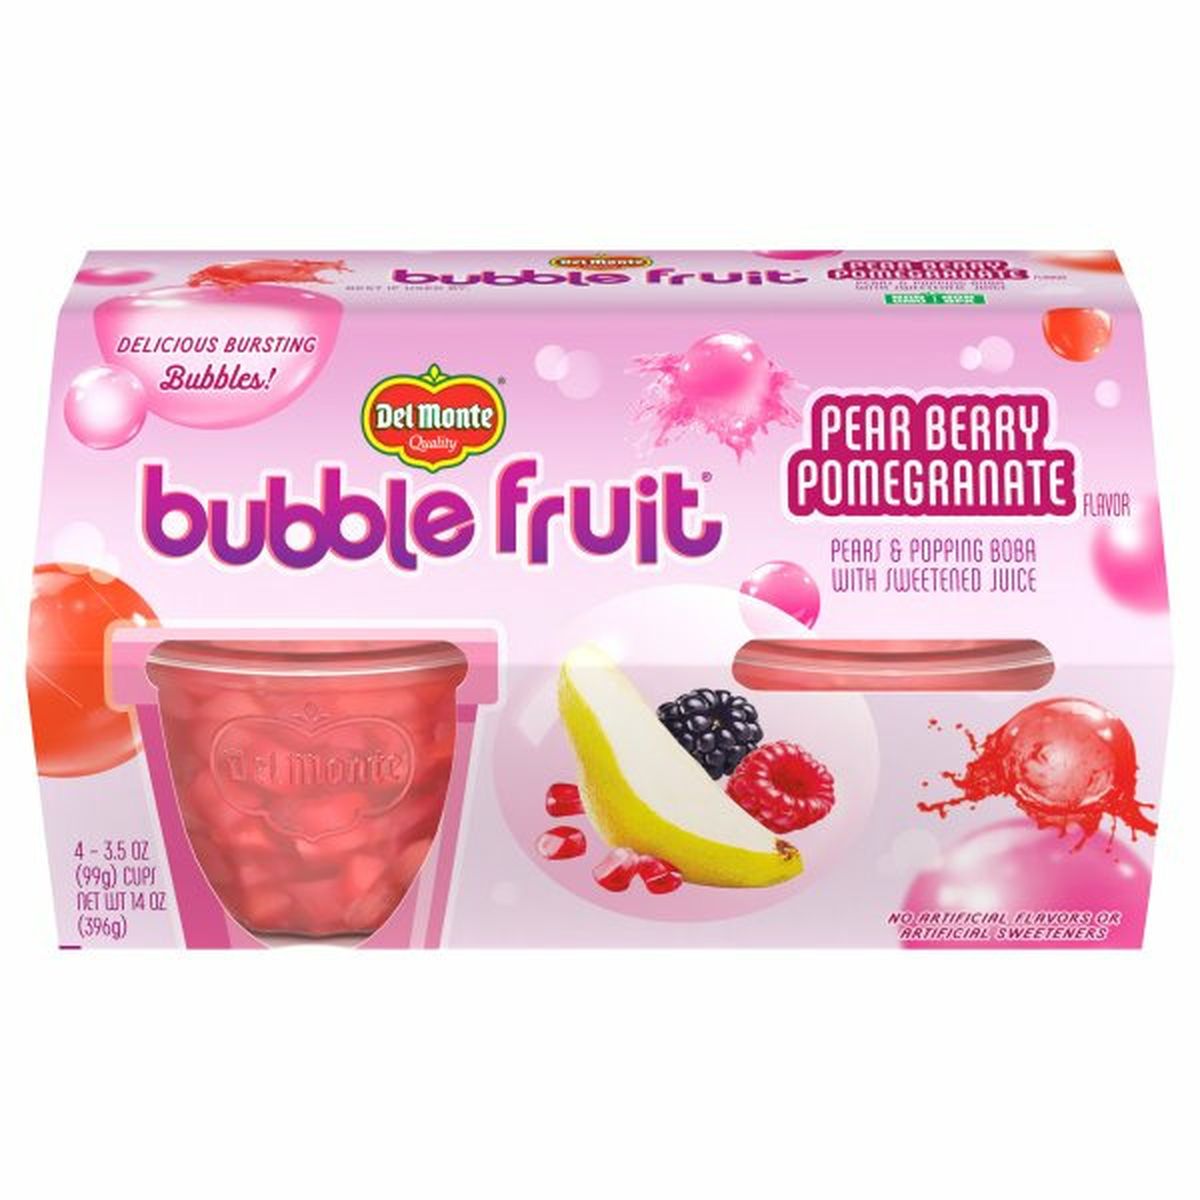 Calories in Del Monte Bubble Fruit, Pear Berry Pomegranate Flavor